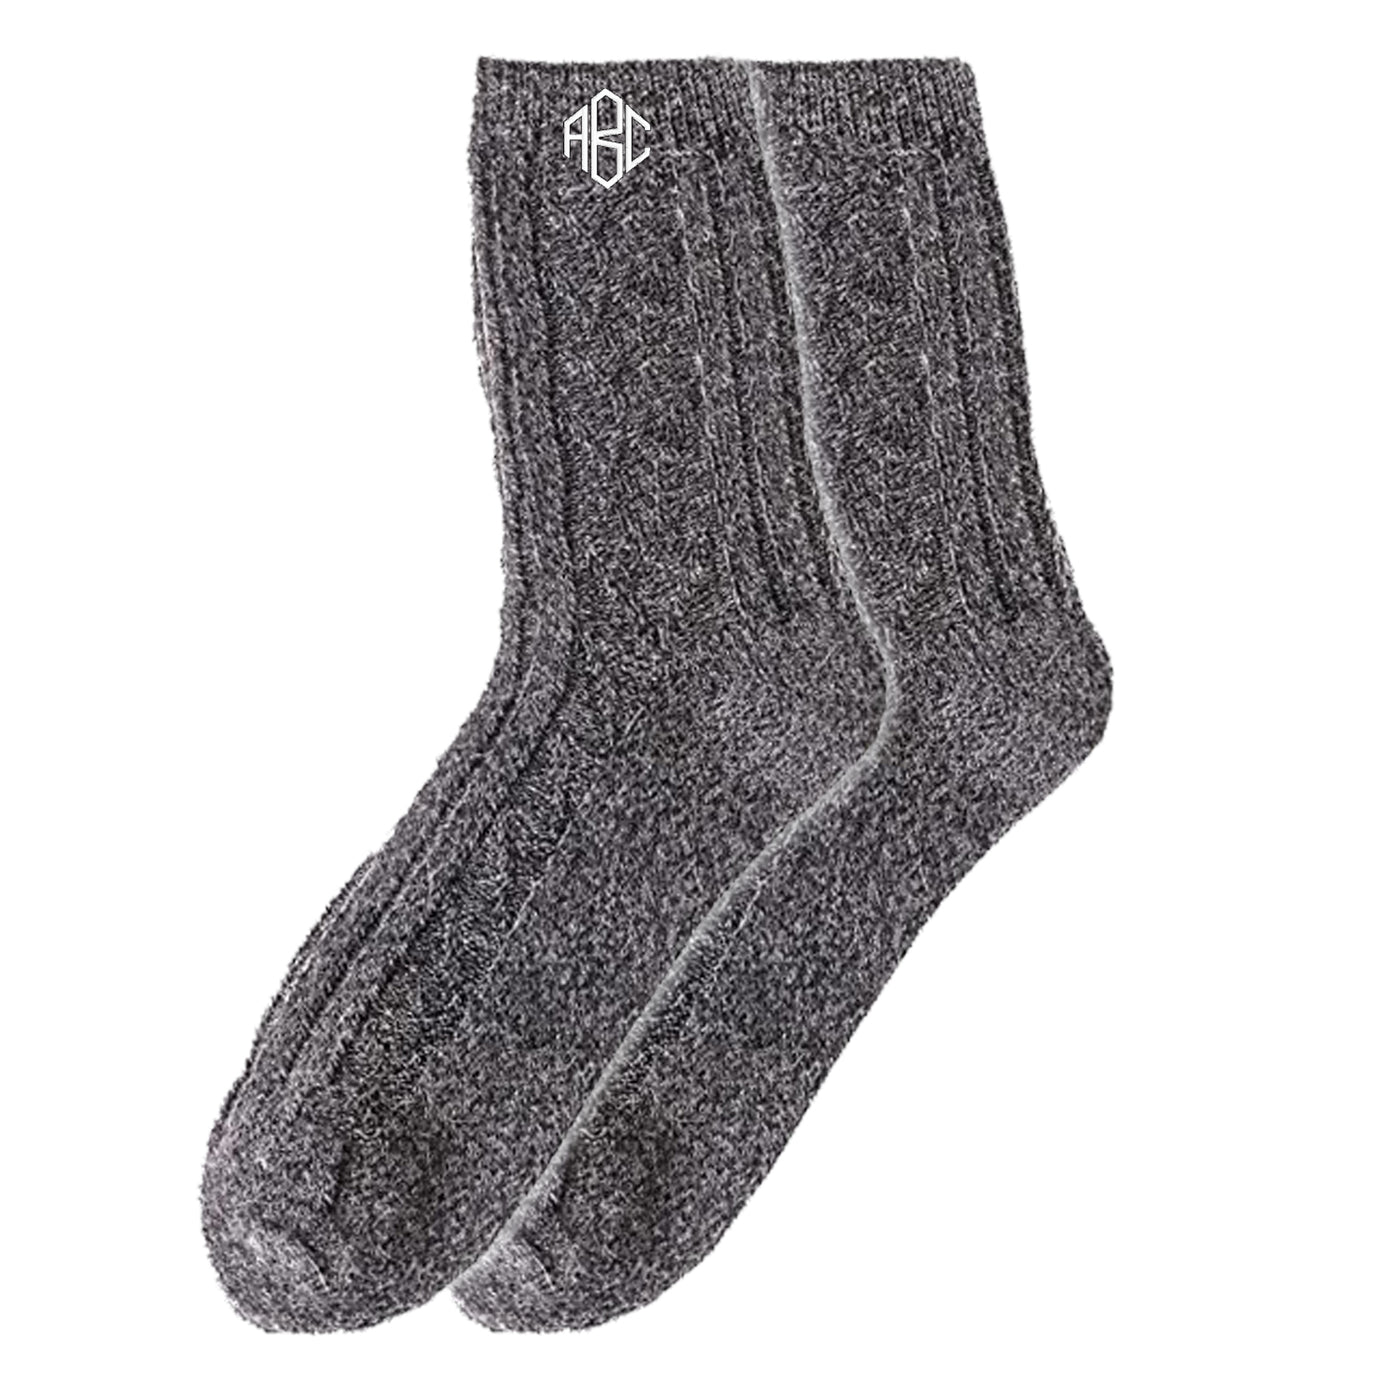 Initialed Wool Knit Socks